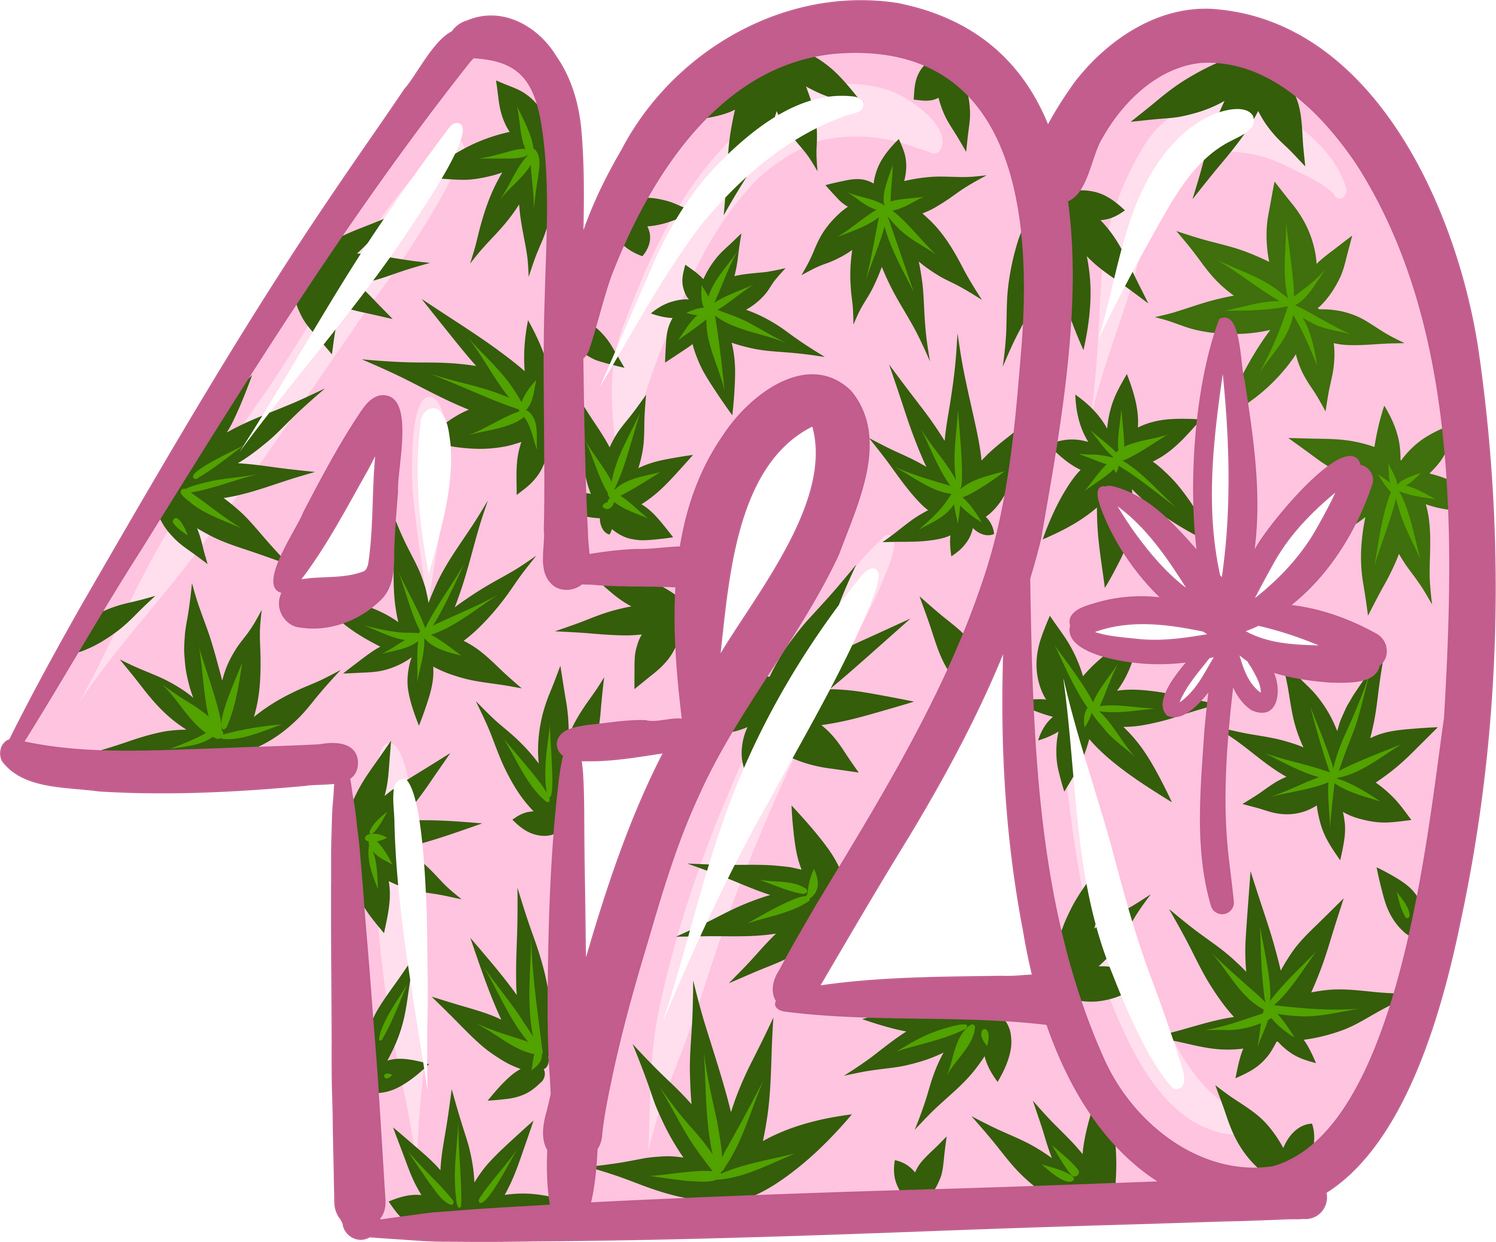 happy 420. time to smoke. cannabis and marijuana